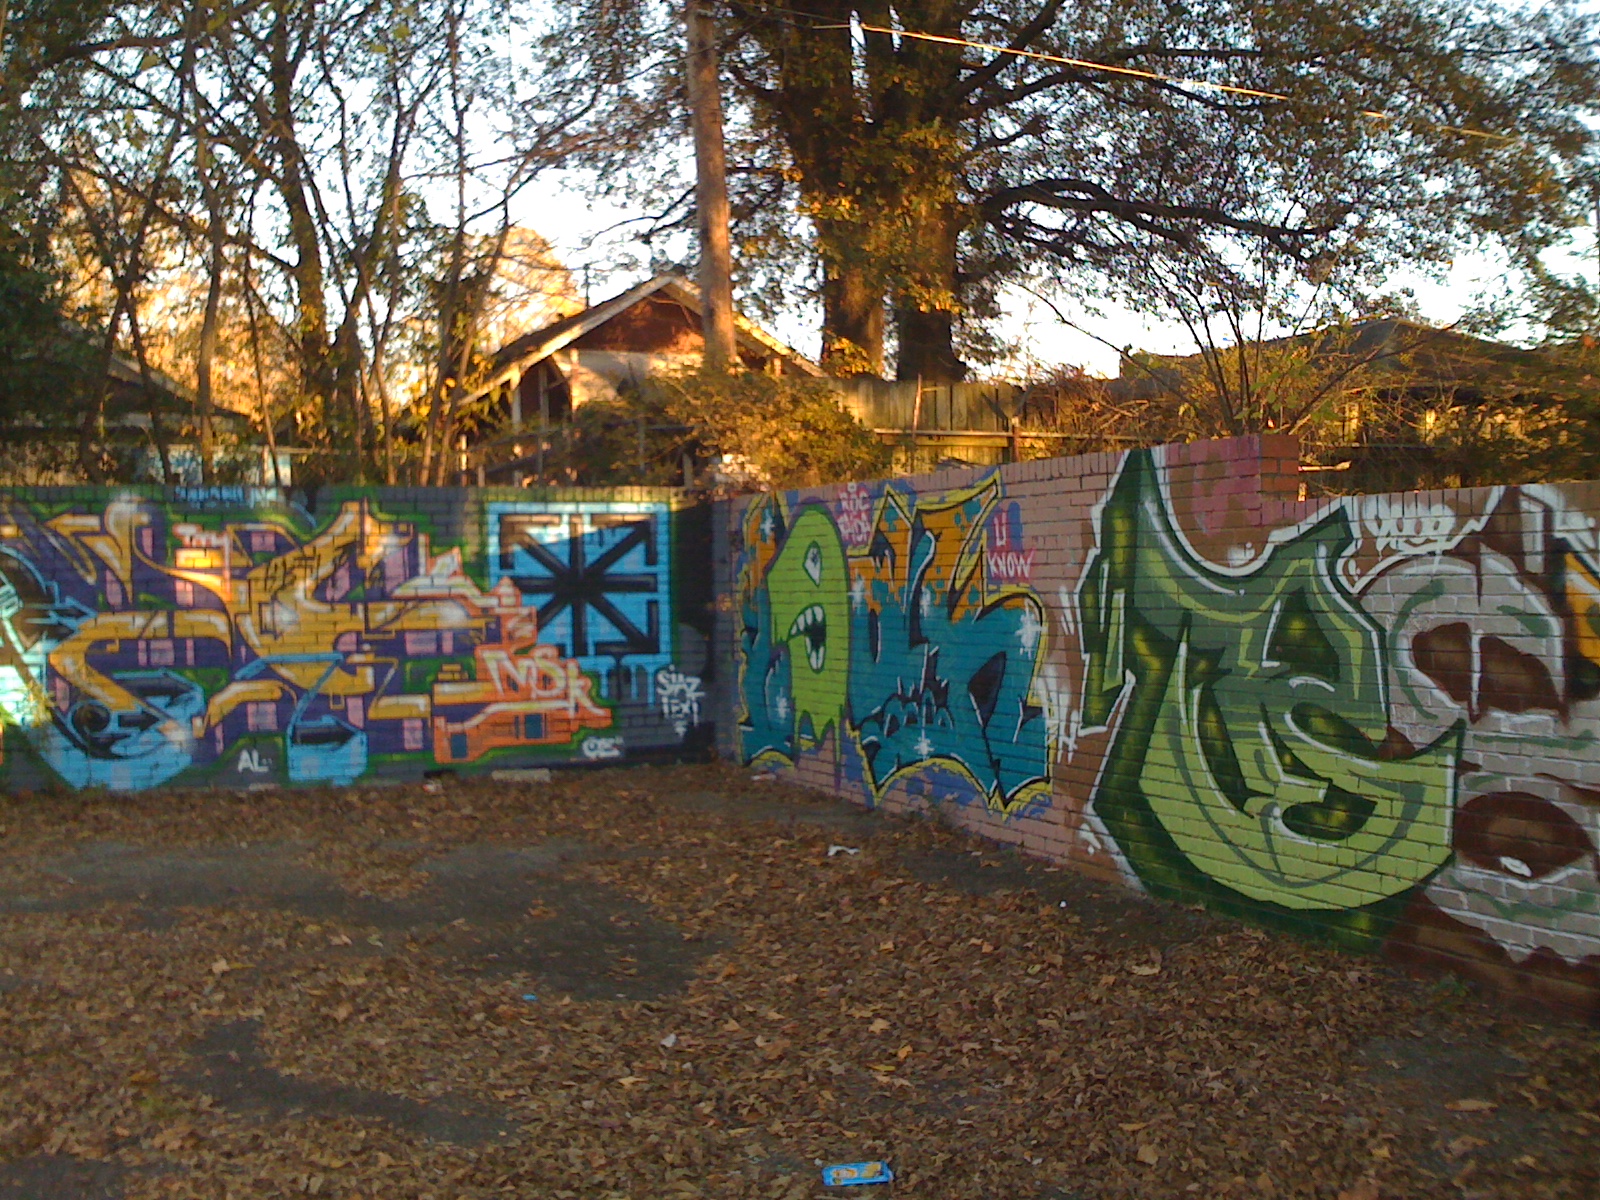 11/29/2009: Cooper-Young graffiti